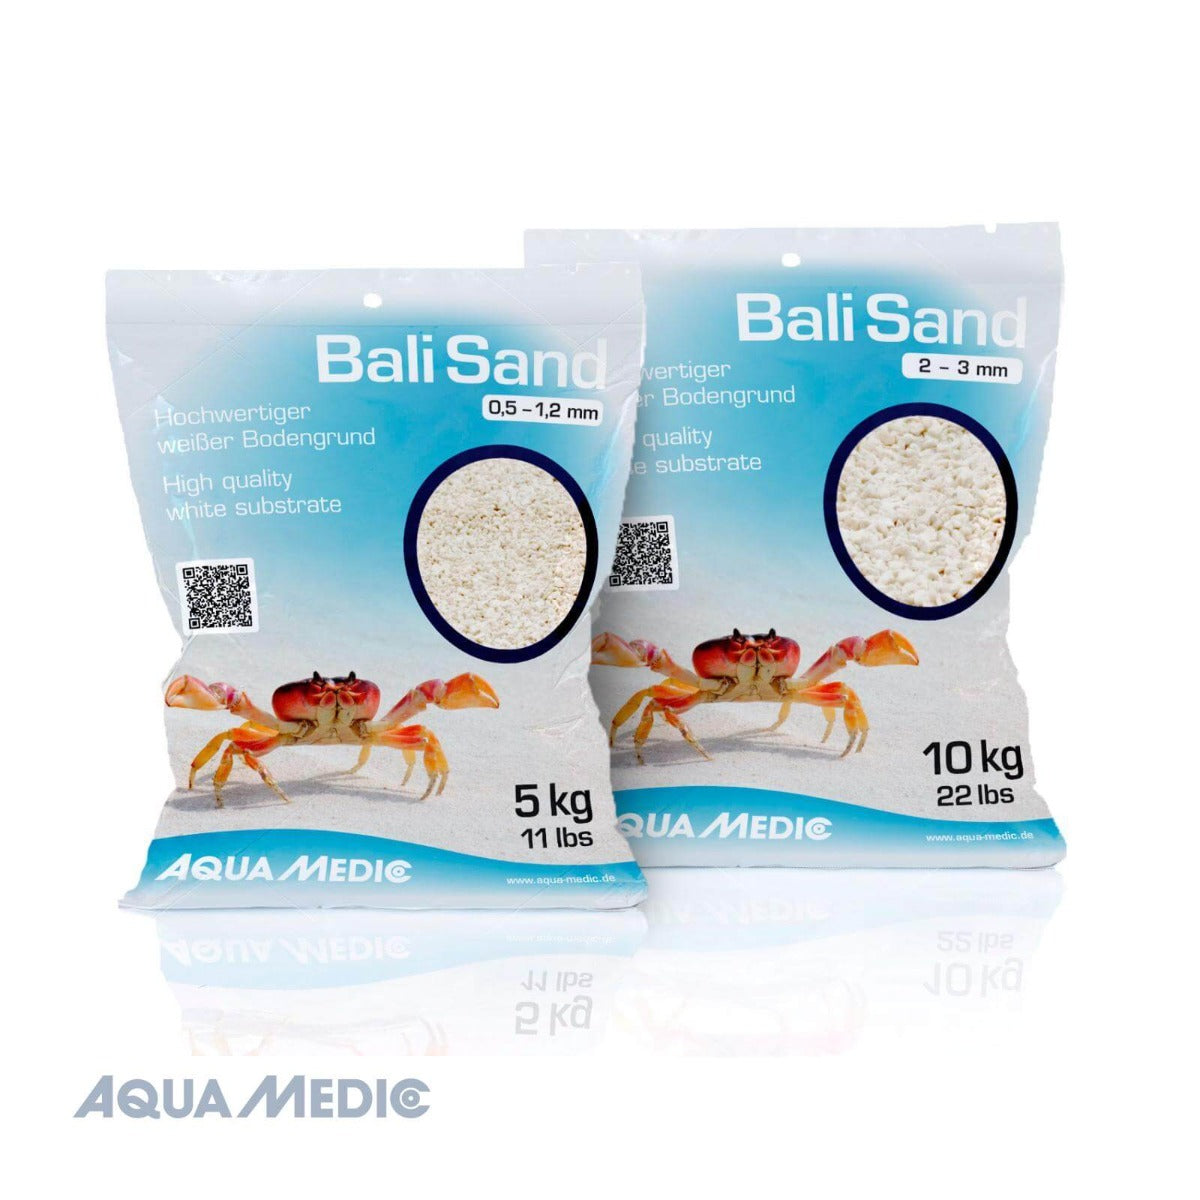 Aqua Medic Bali Sand 0,5 – 1,2 mm